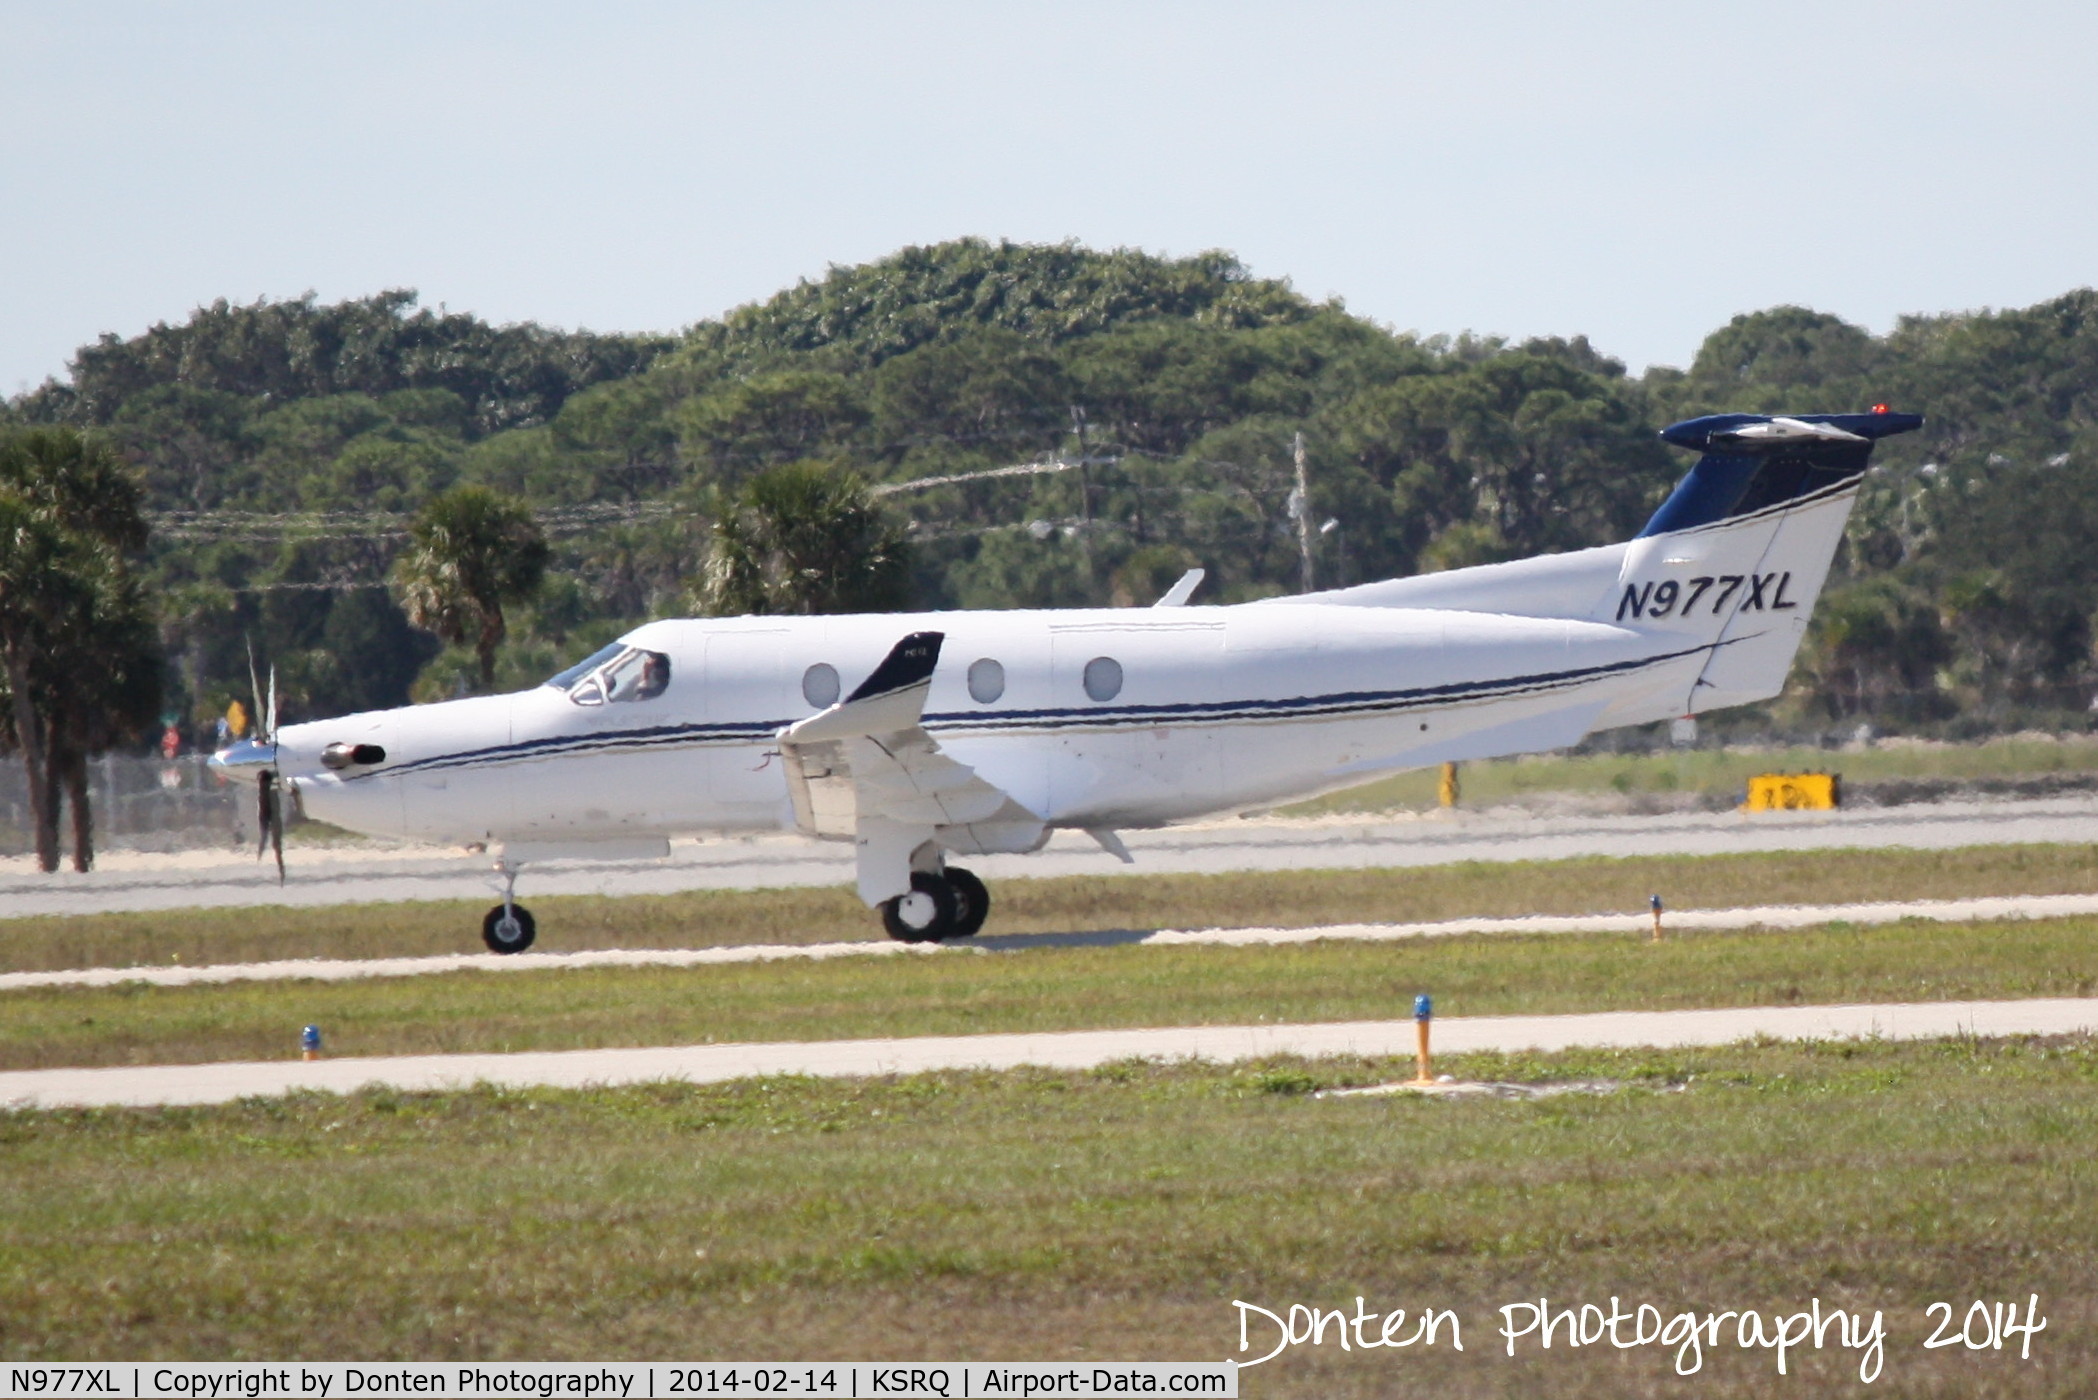 N977XL, 1997 Pilatus PC-12/45 C/N 189, Pilatus PC-12 (N977XL) arrives at Sarasota-Bradenton International Airport following a flight from Page Field Airport